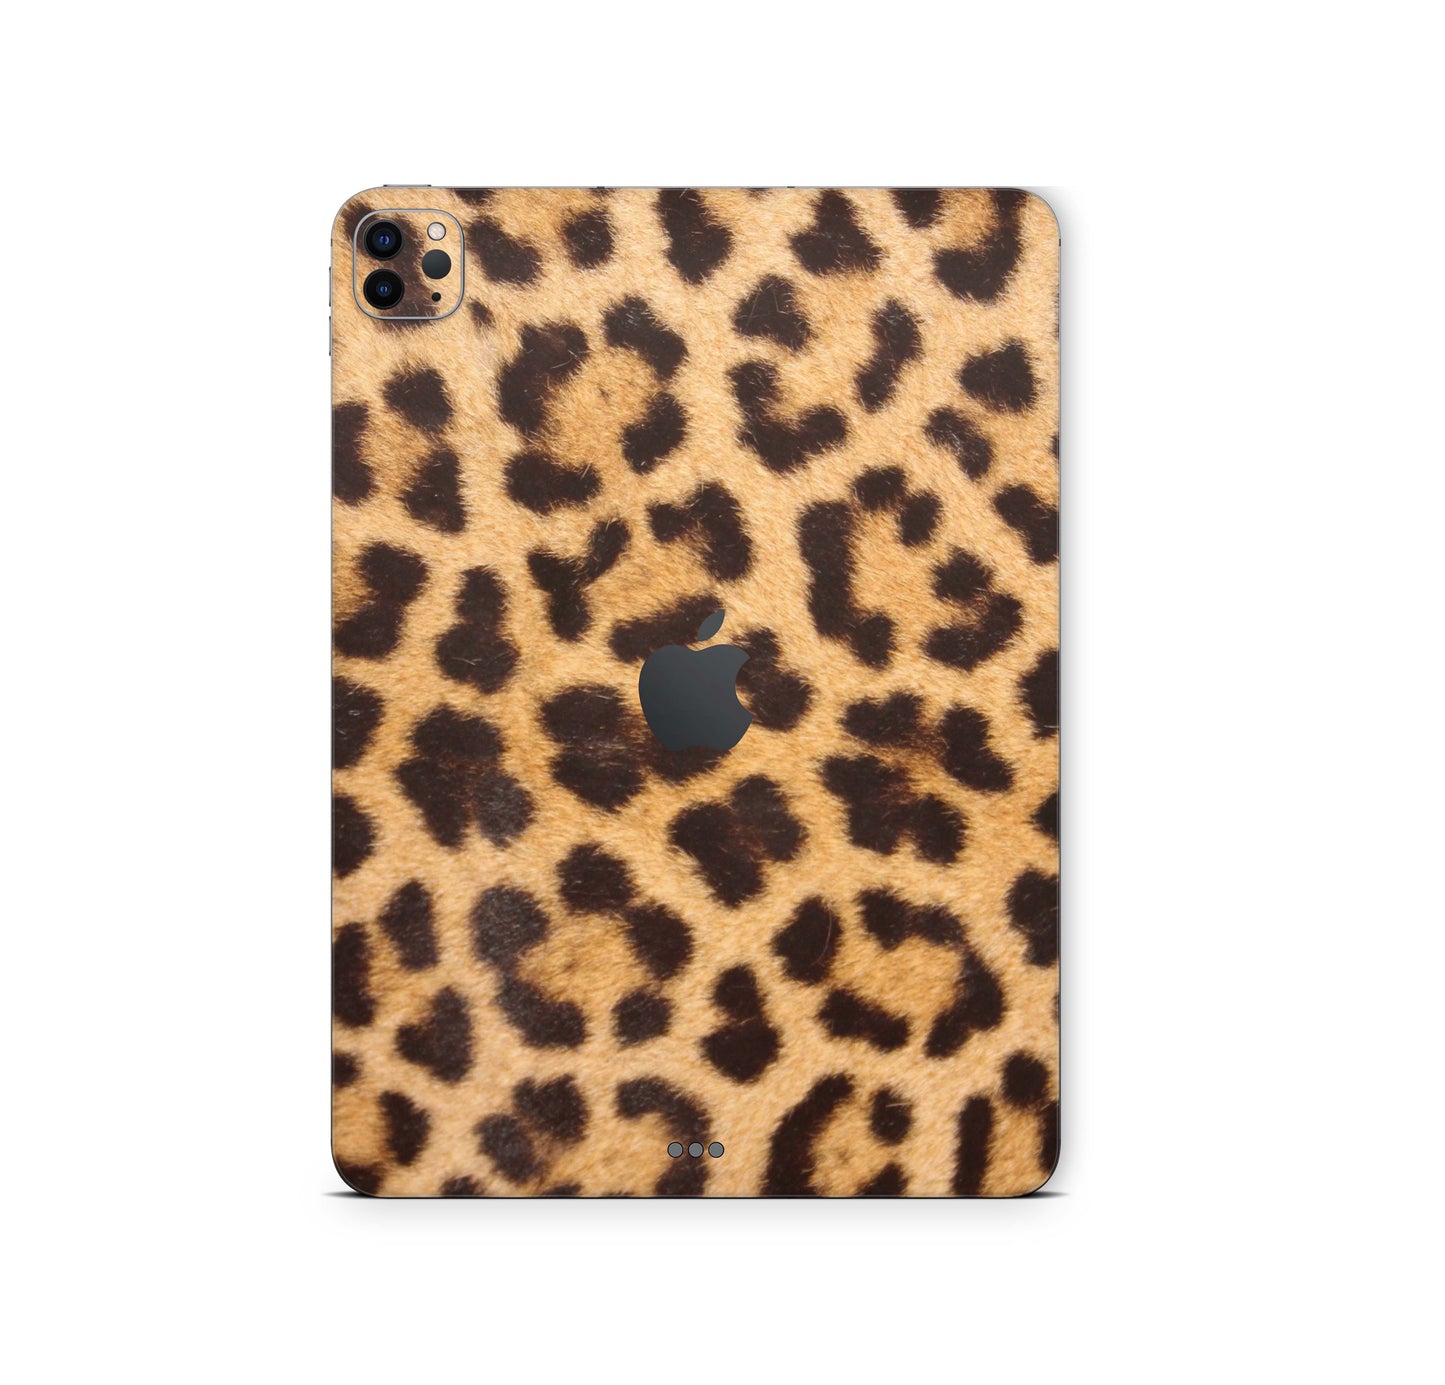 iPad Pro Skin 12,9 3.Generation Design Cover Folie Vinyl Skins & Wraps Aufkleber Skins4u Leopardenfell  